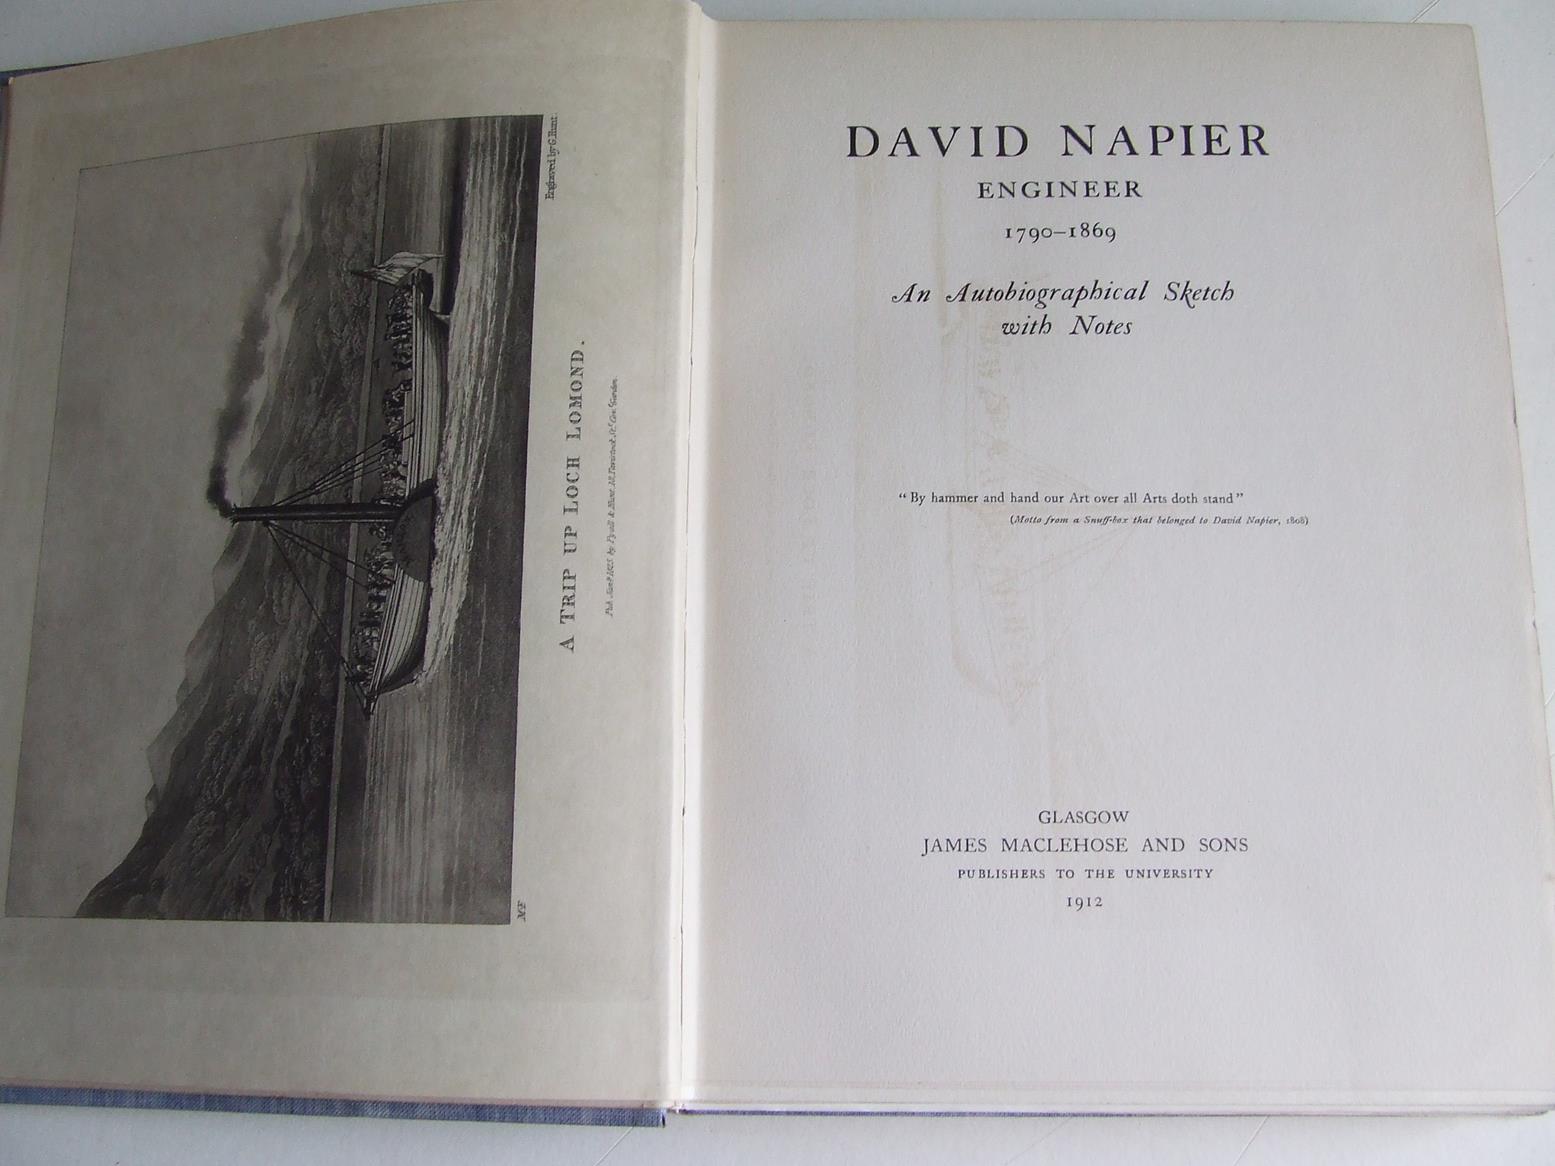 David Napier, Engineer 1790-1869